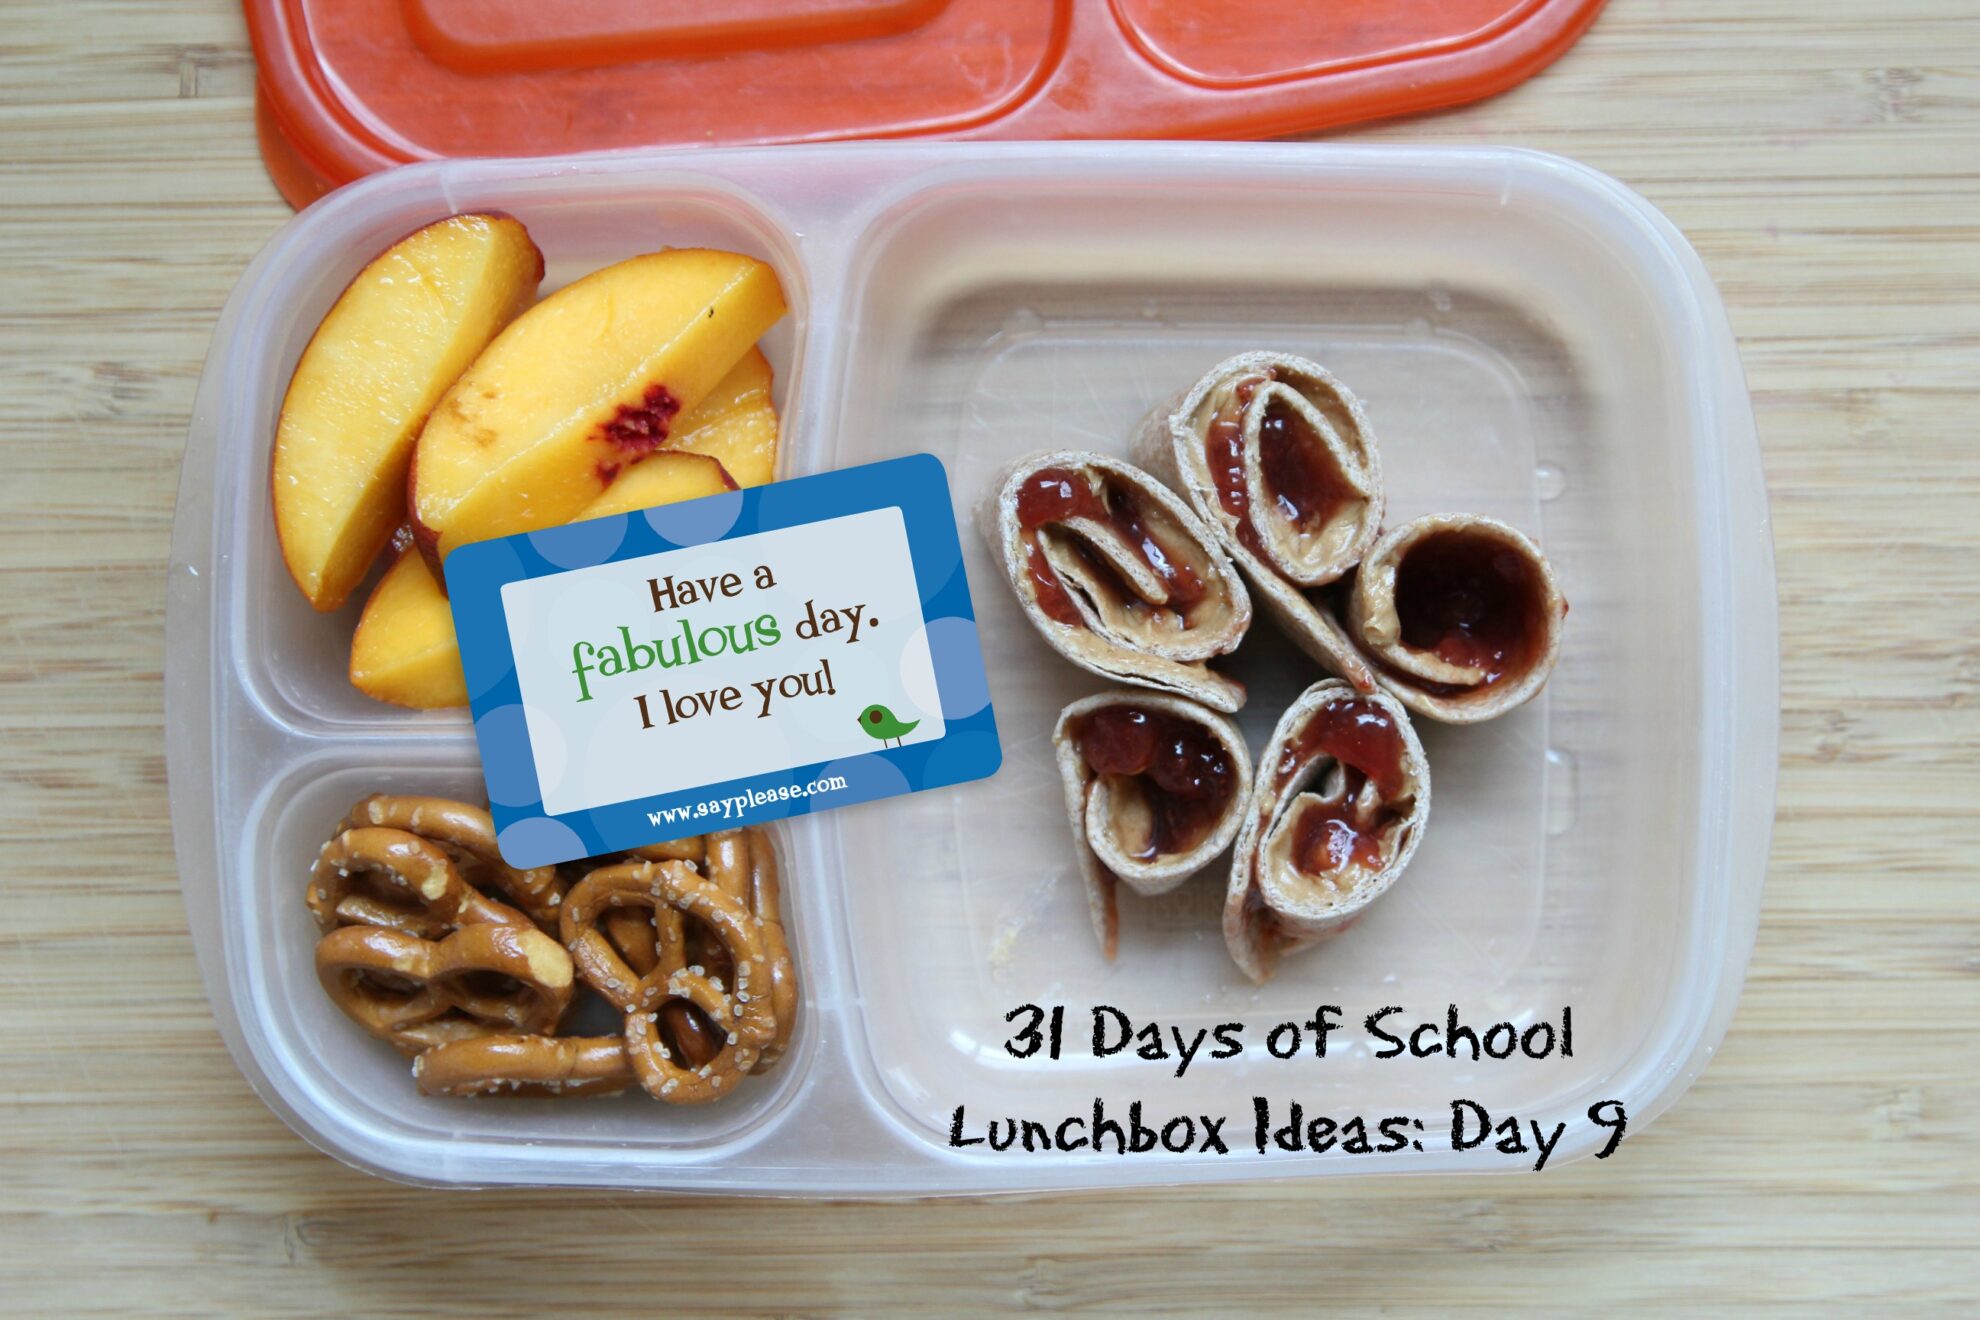 https://www.5dollardinners.com/wp-content/uploads/2014/08/31-Days-of-School-Lunchbox-Ideas-Day-9-5DollarDinnerscom.jpg